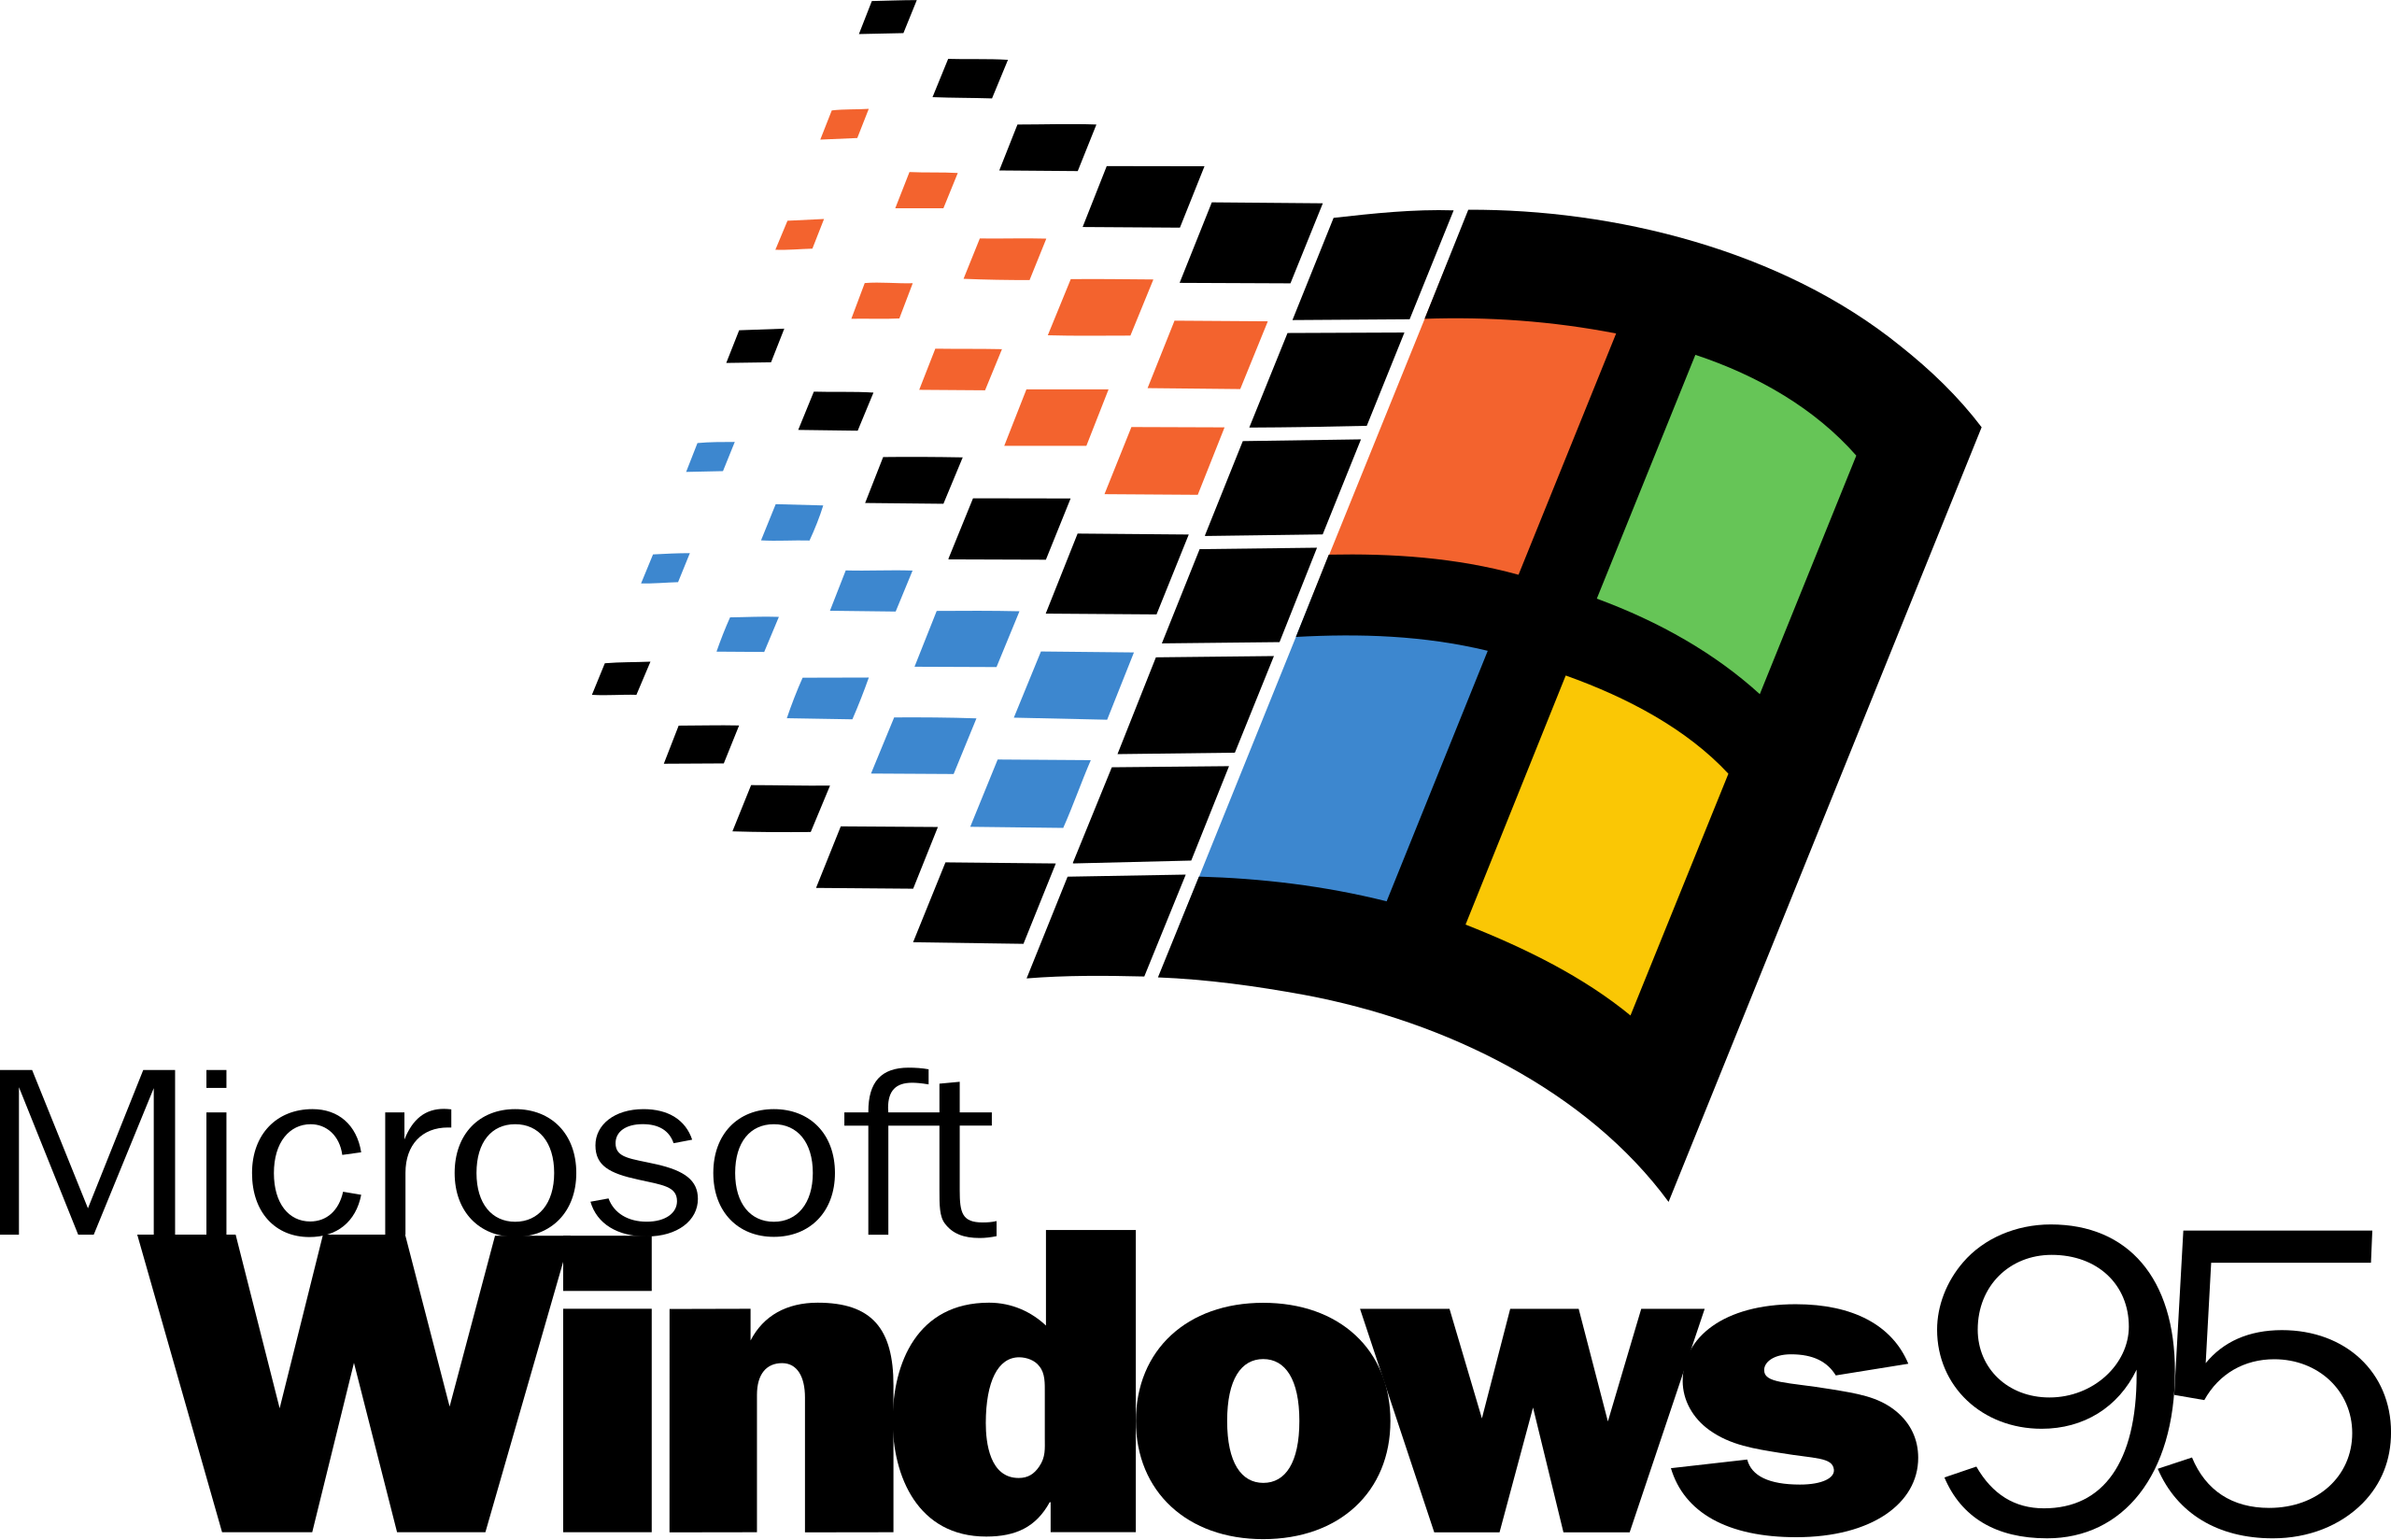 File:Windows 95 stacked logo.svg - Wikimedia Commons